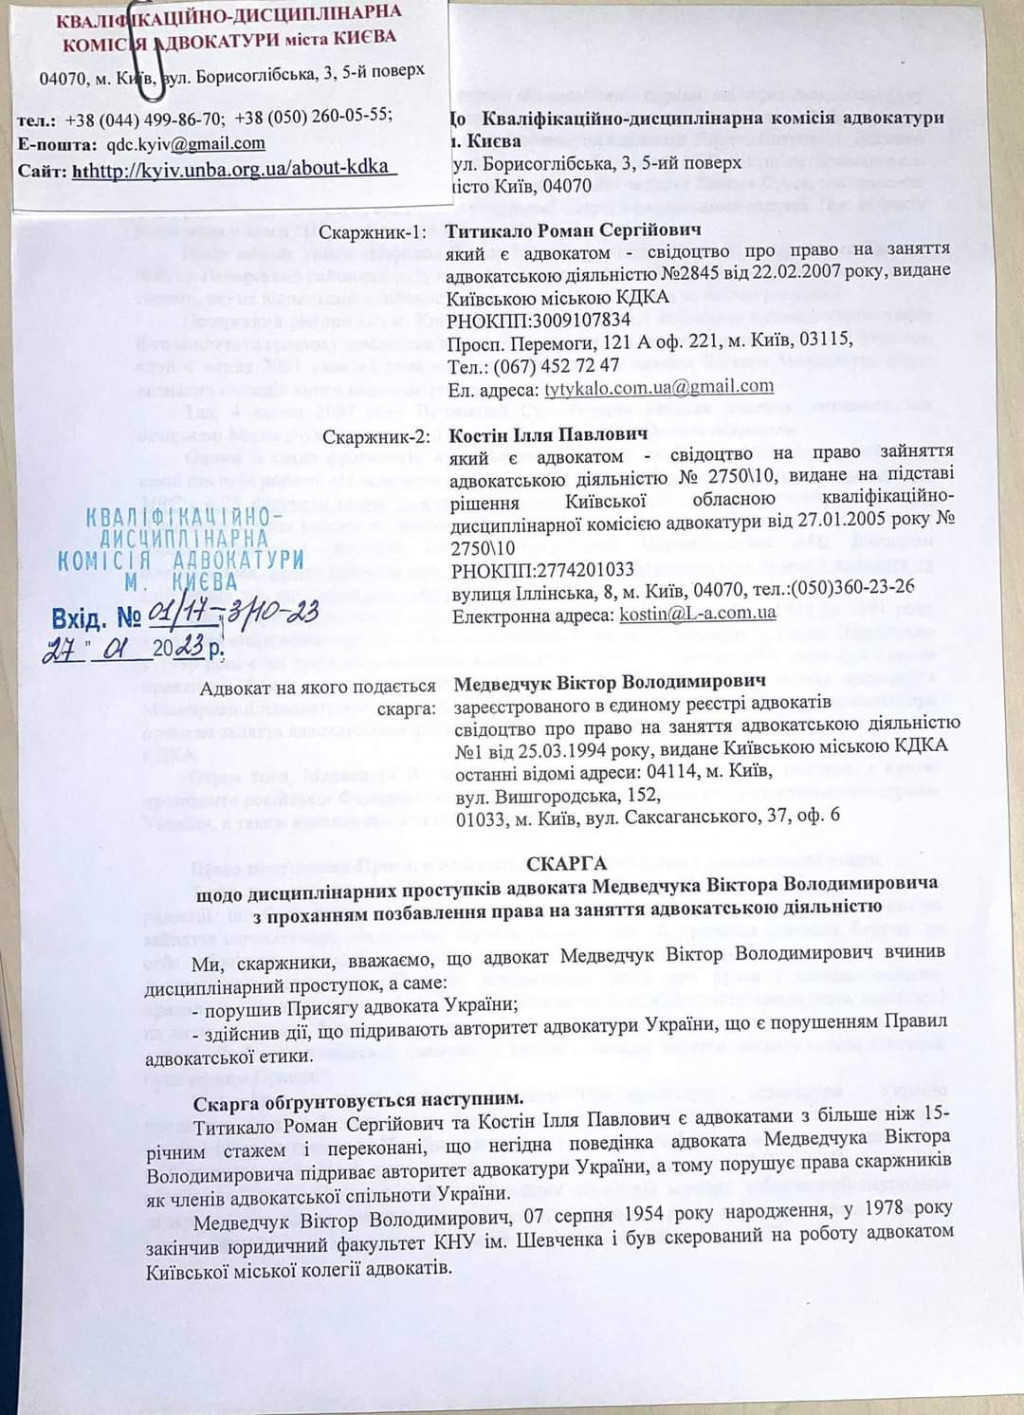 Депутат Київоблради Титикало позбавляє Медведчука свідоцтва адвоката